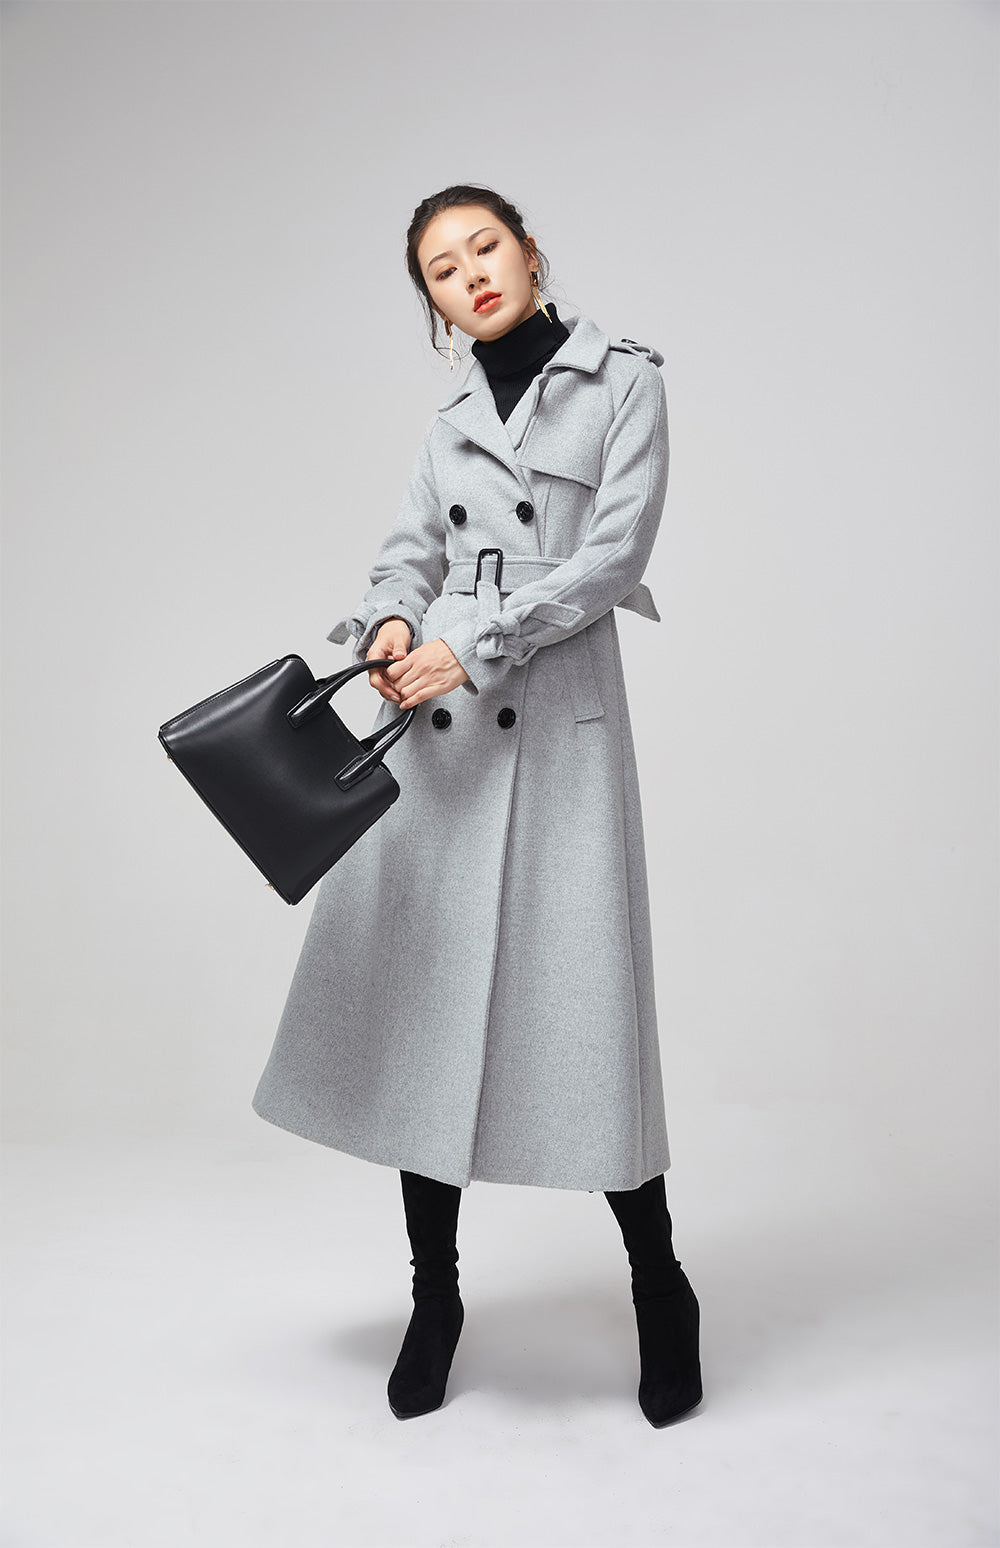 light gray wool coat, womens short winter coat 2056 – XiaoLizi